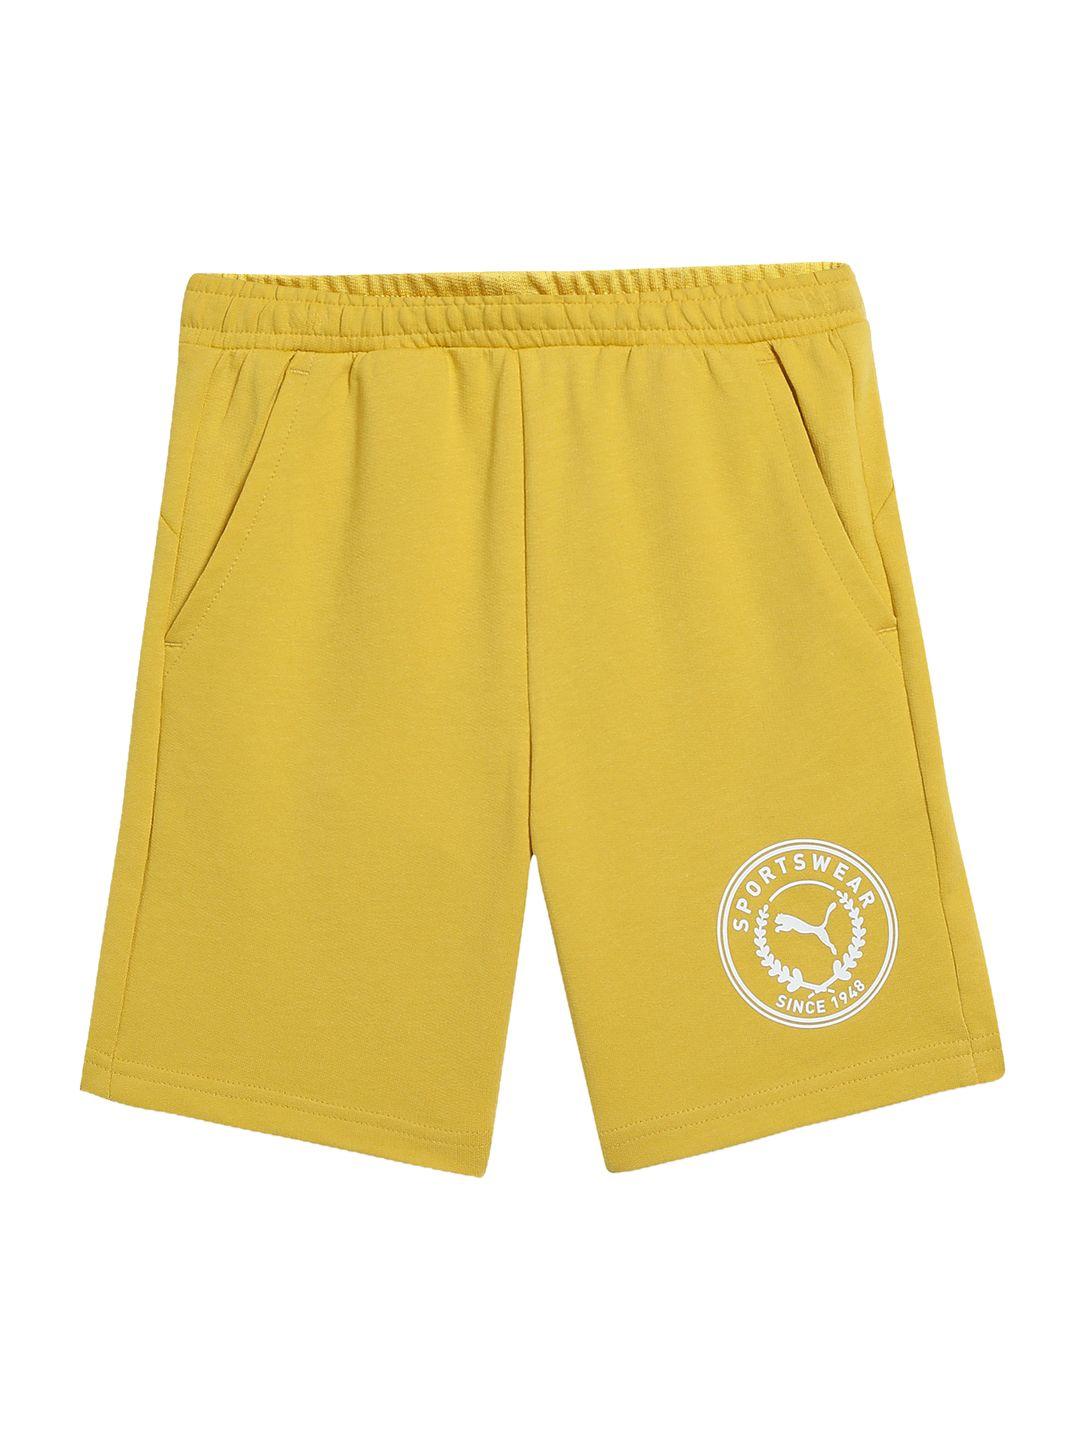 puma-boys-brand-logo-printed-cotton-shorts